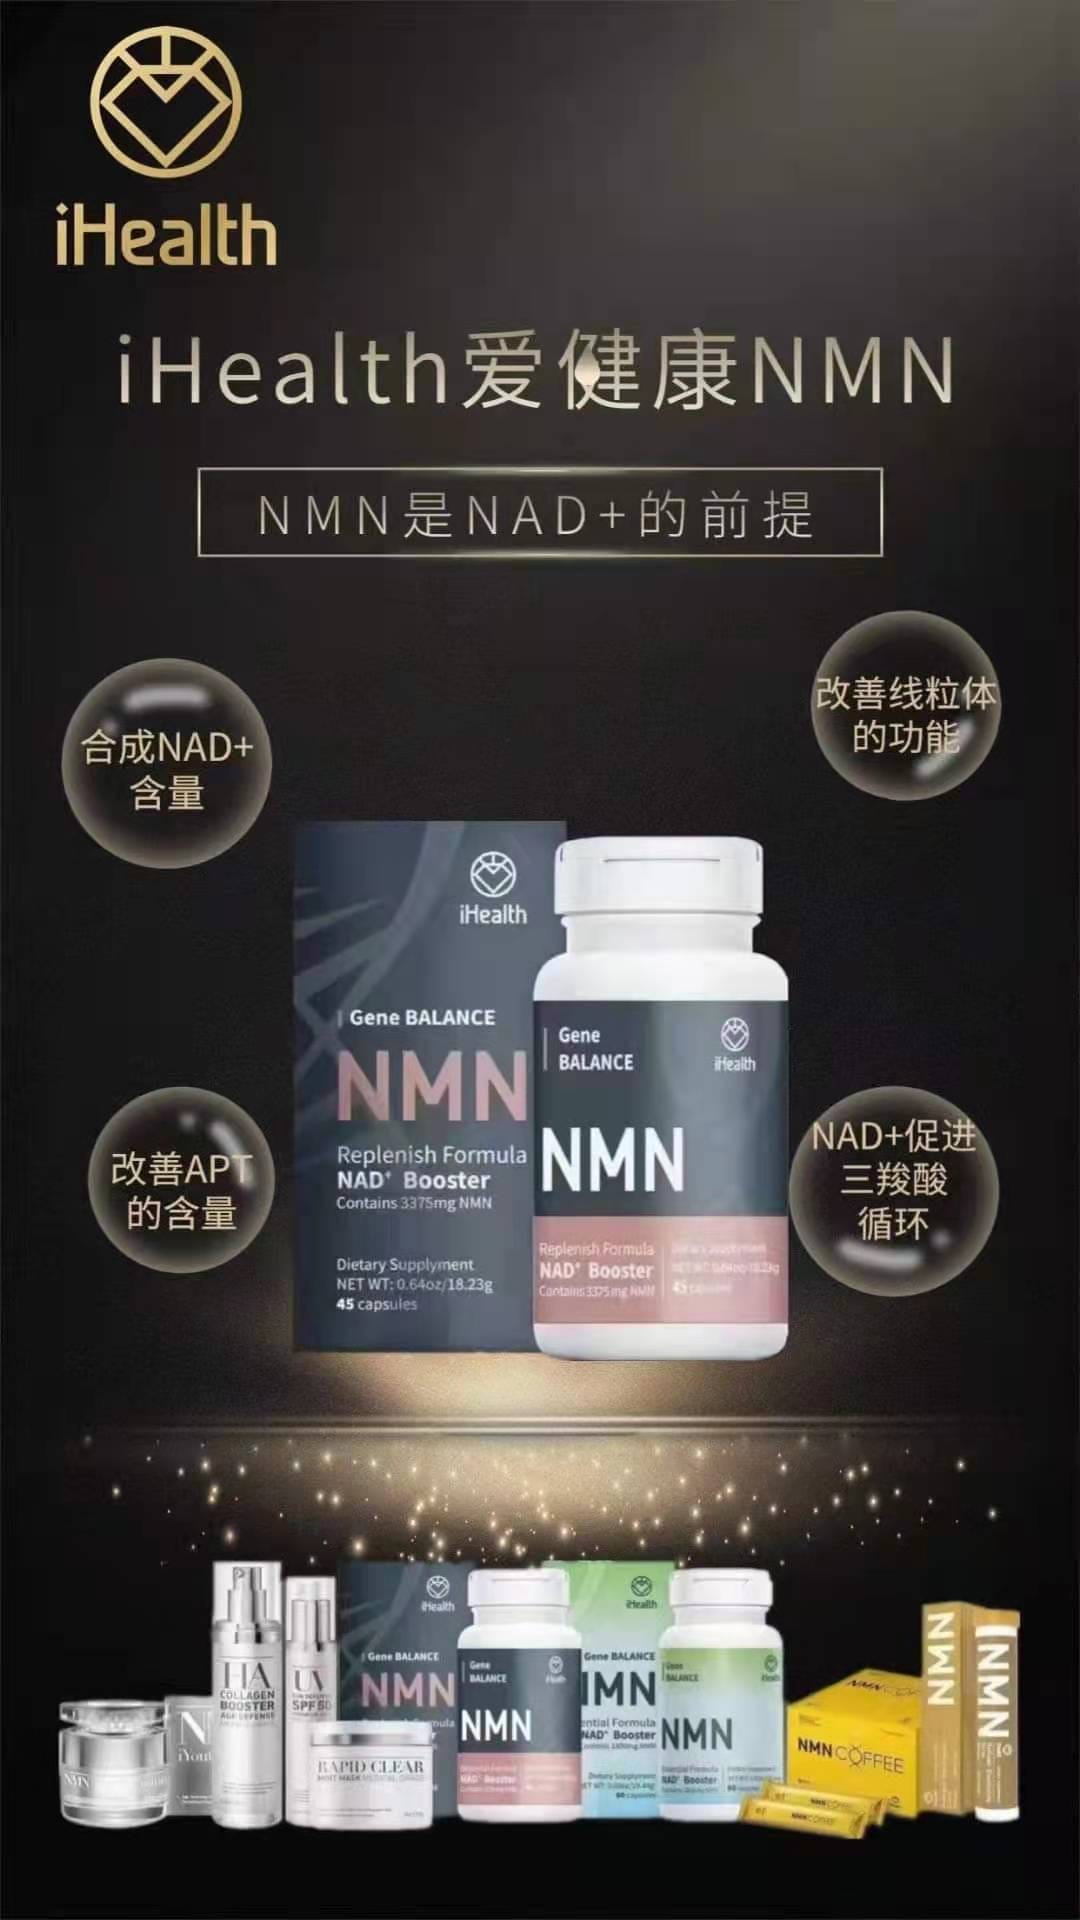 NMN 对 抑郁症 有帮助吗？